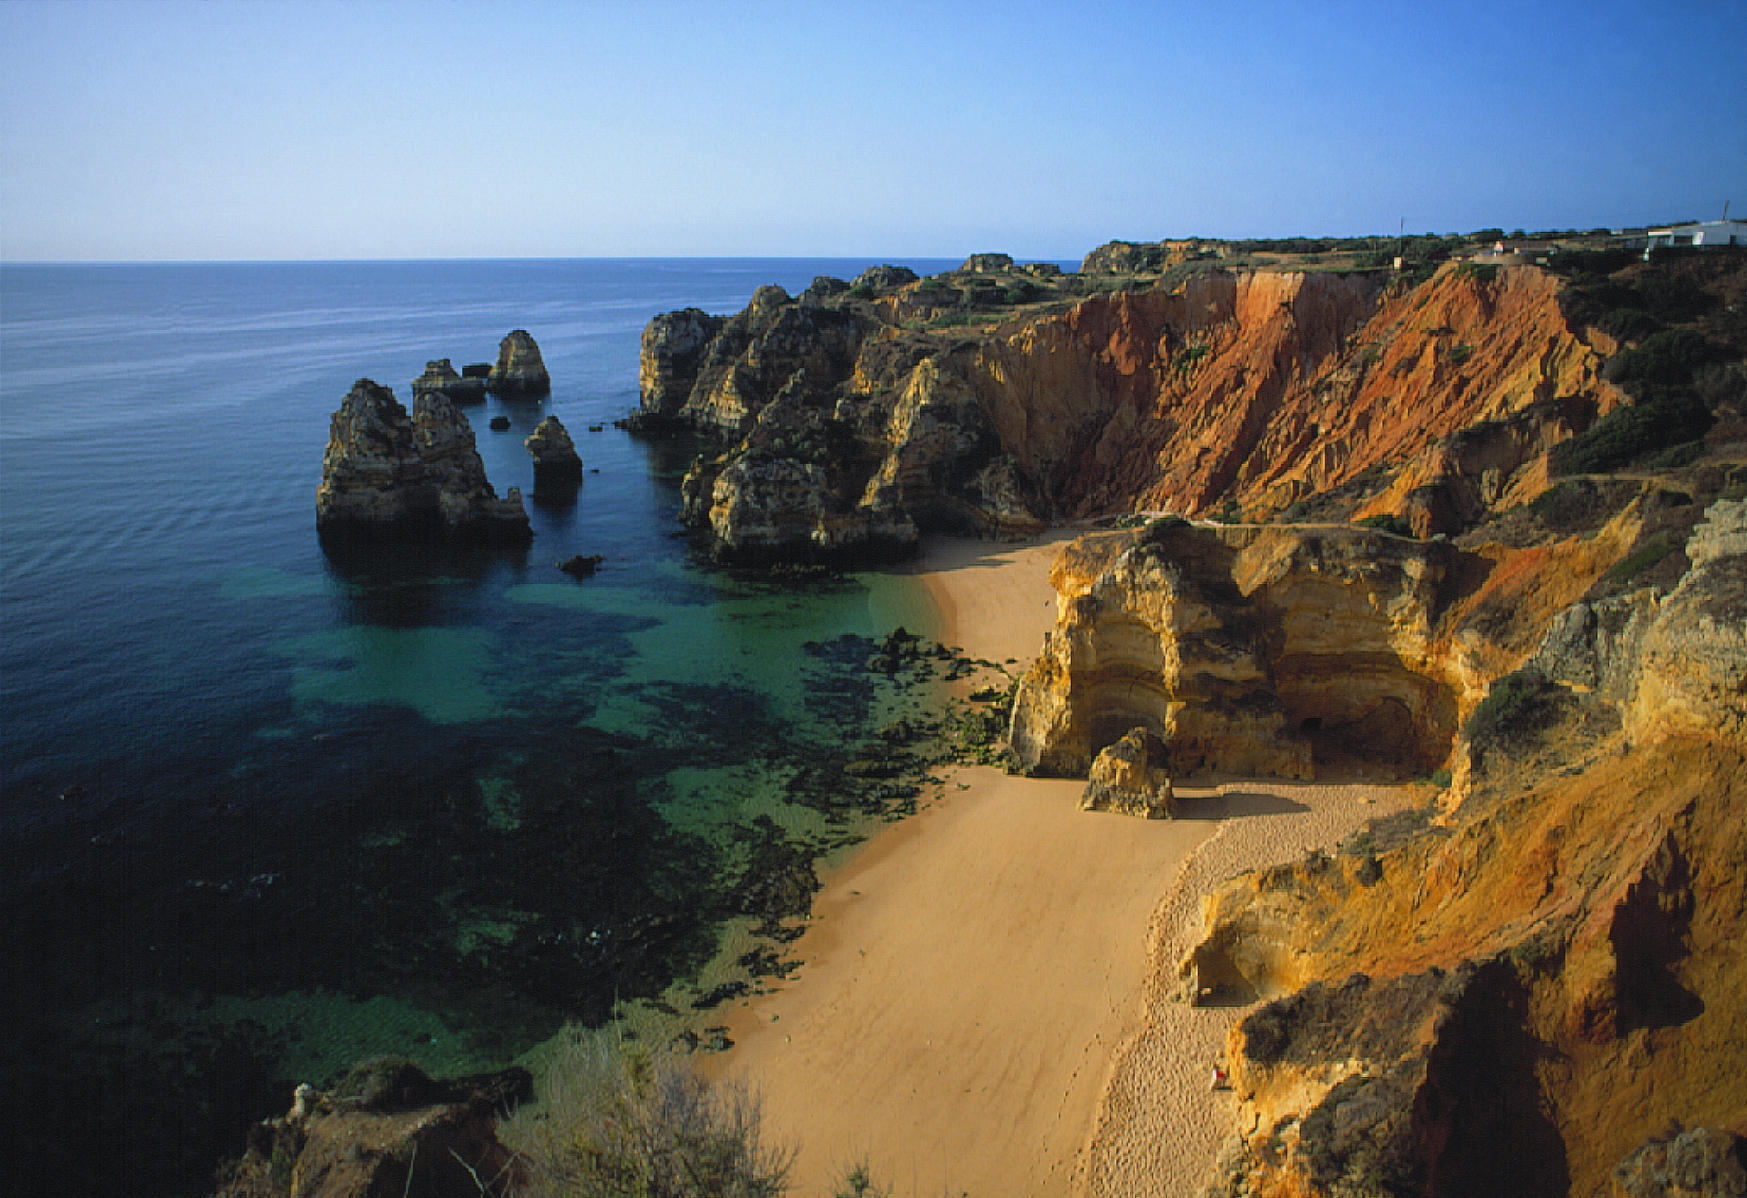 Portugal is still Europe's #1 golf destination